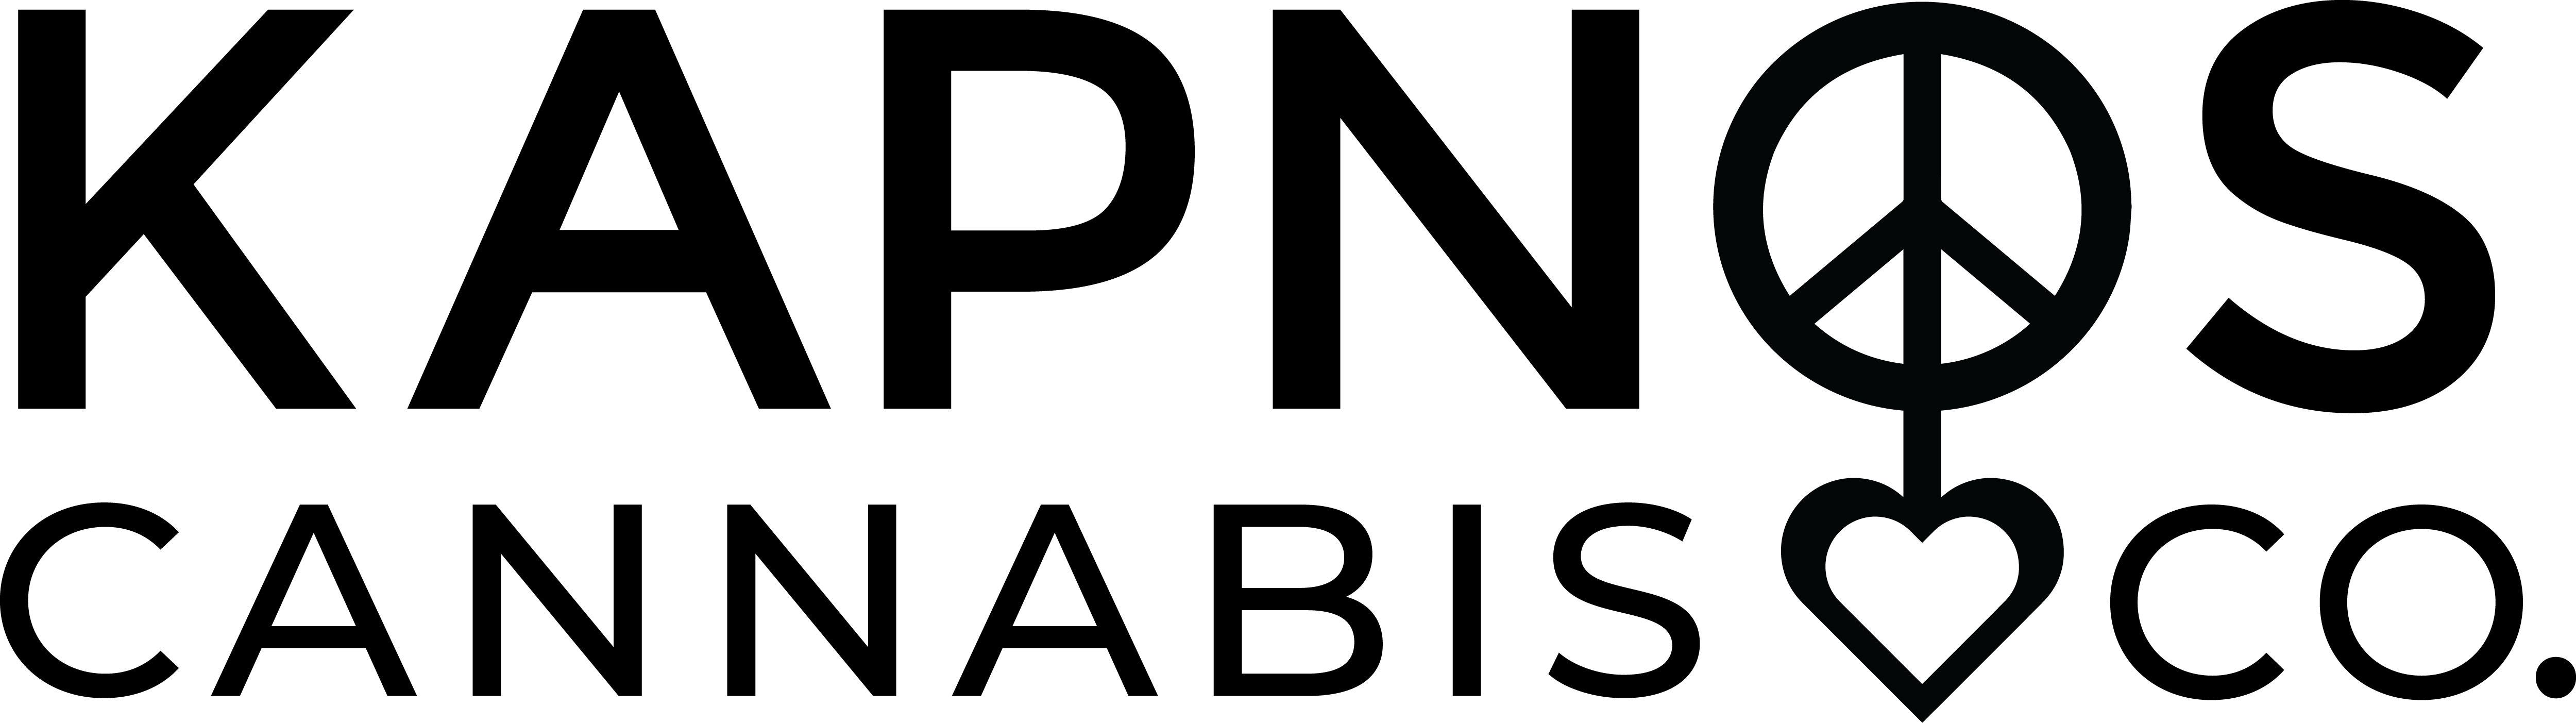 Kapnos Cannabis Co. logo